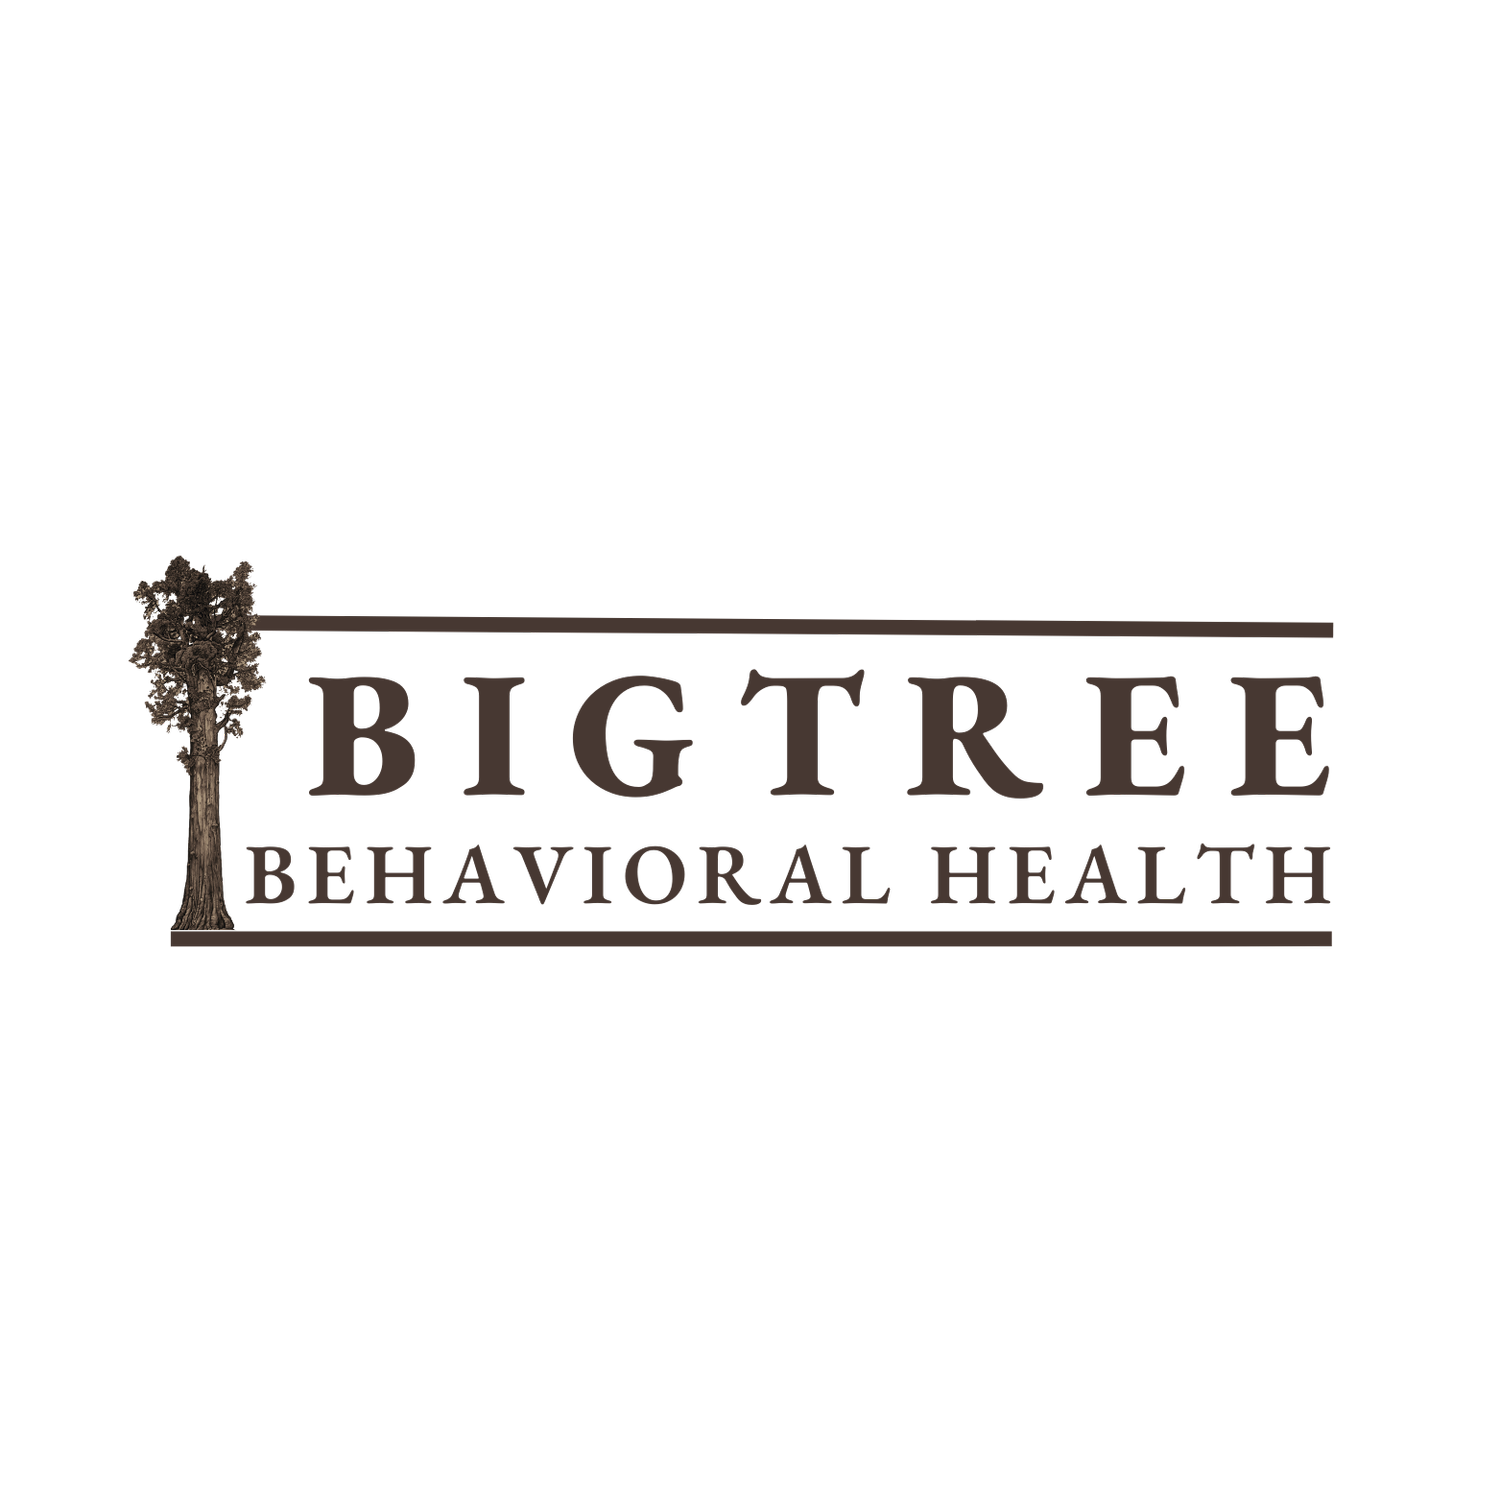 BigTree Behavioral Health Services